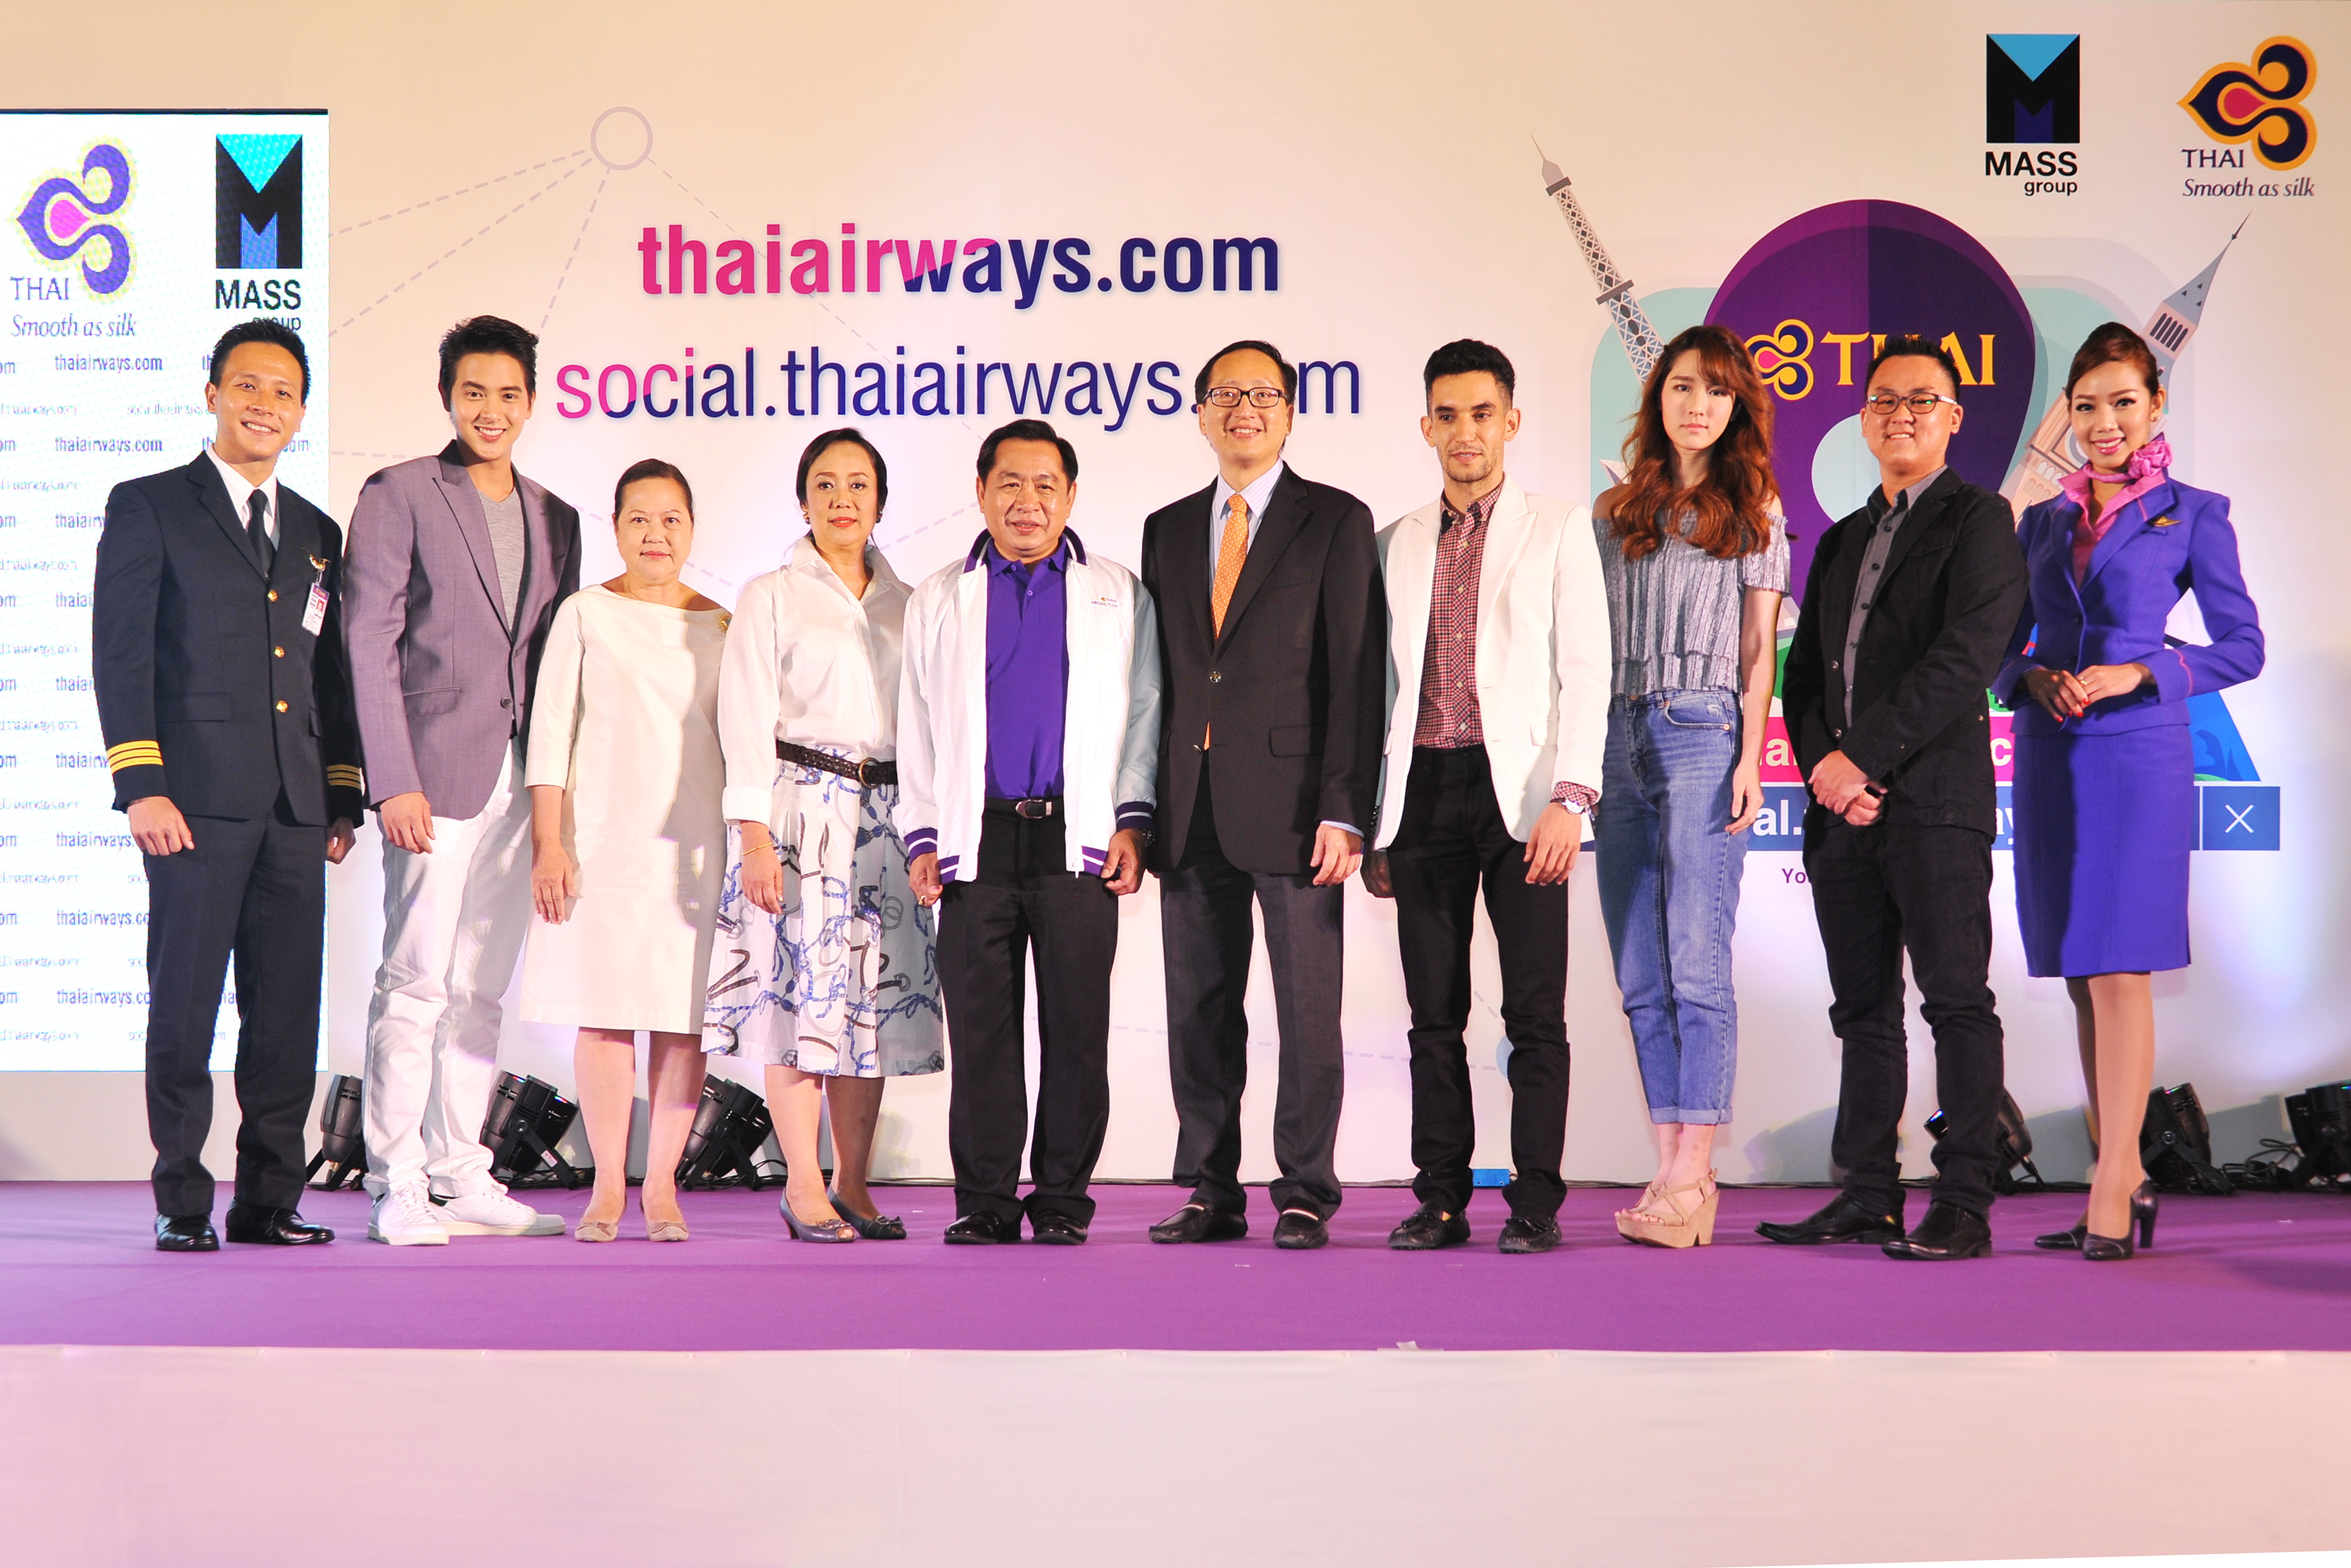 THAI launches social.thaiairways.com